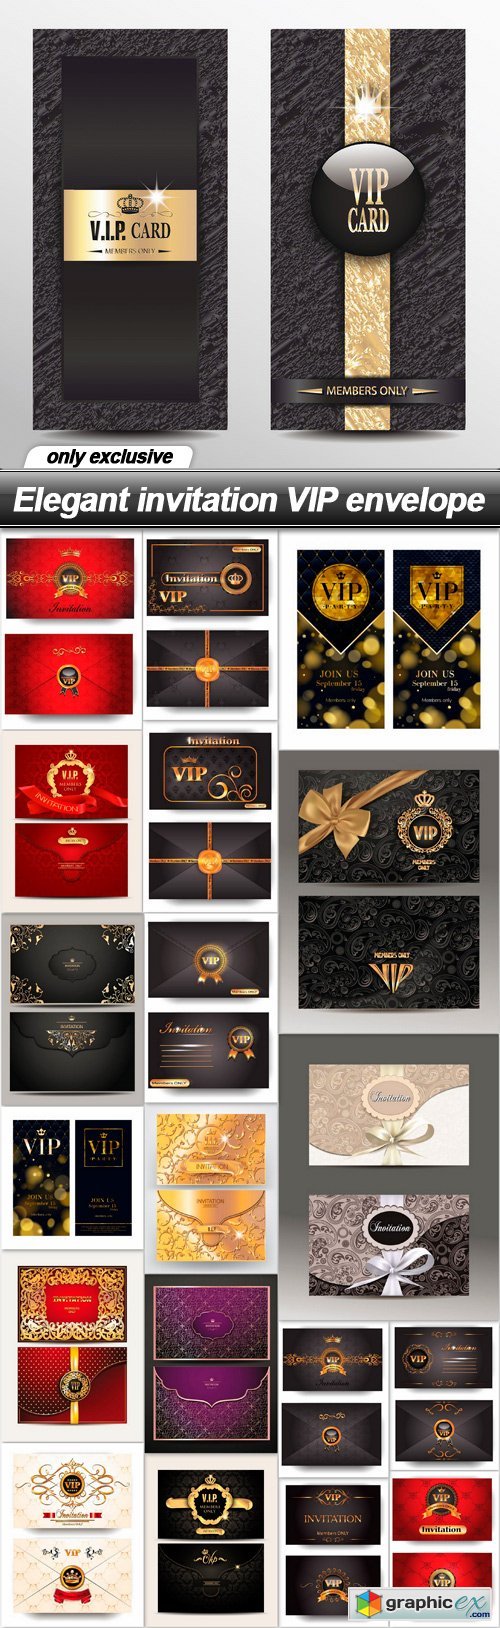 Elegant invitation VIP envelope - 20 EPS